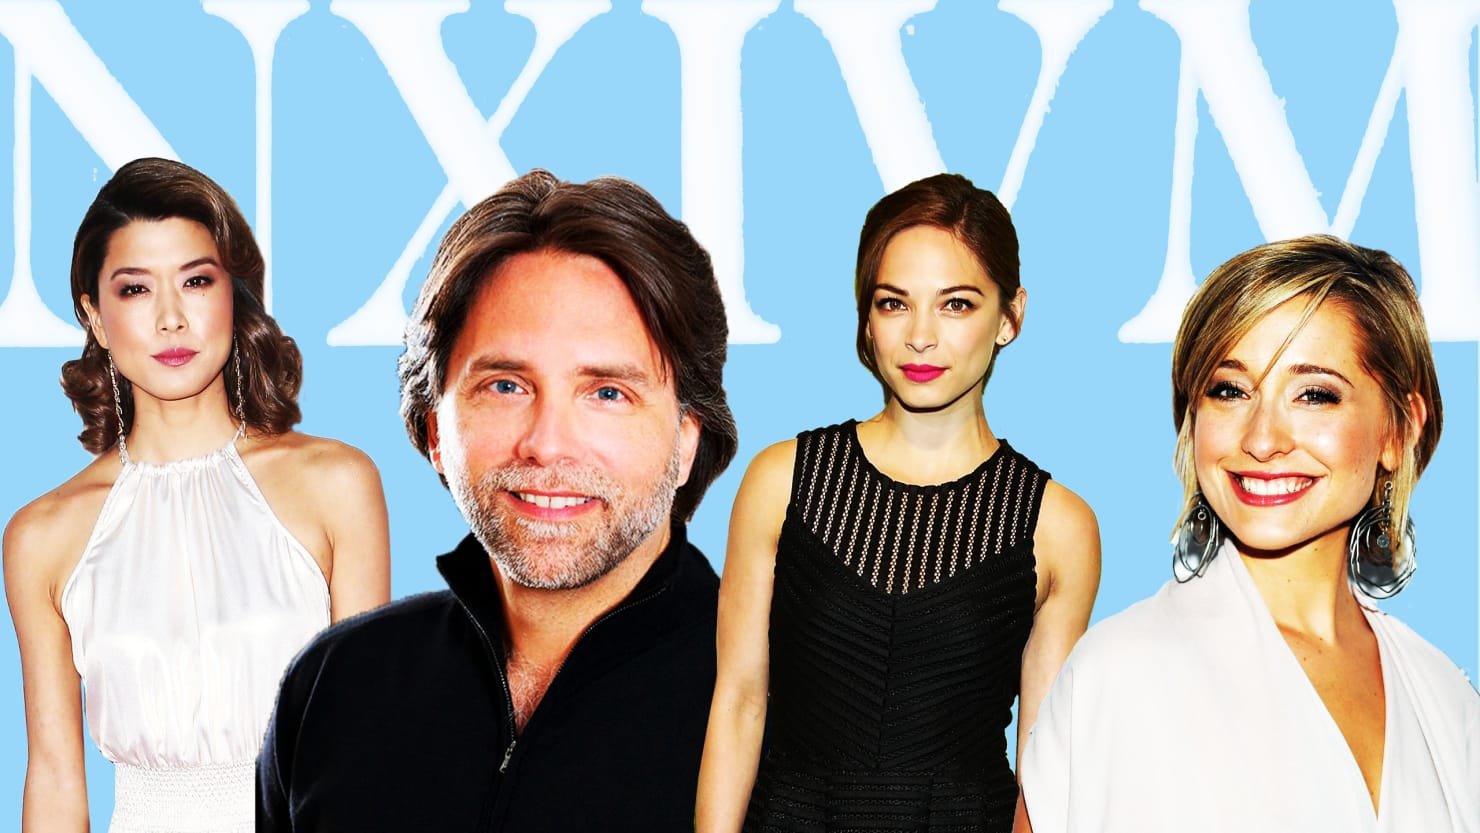 The Hollywood Followers of Nxivm, a Women-Branding Sex Cult